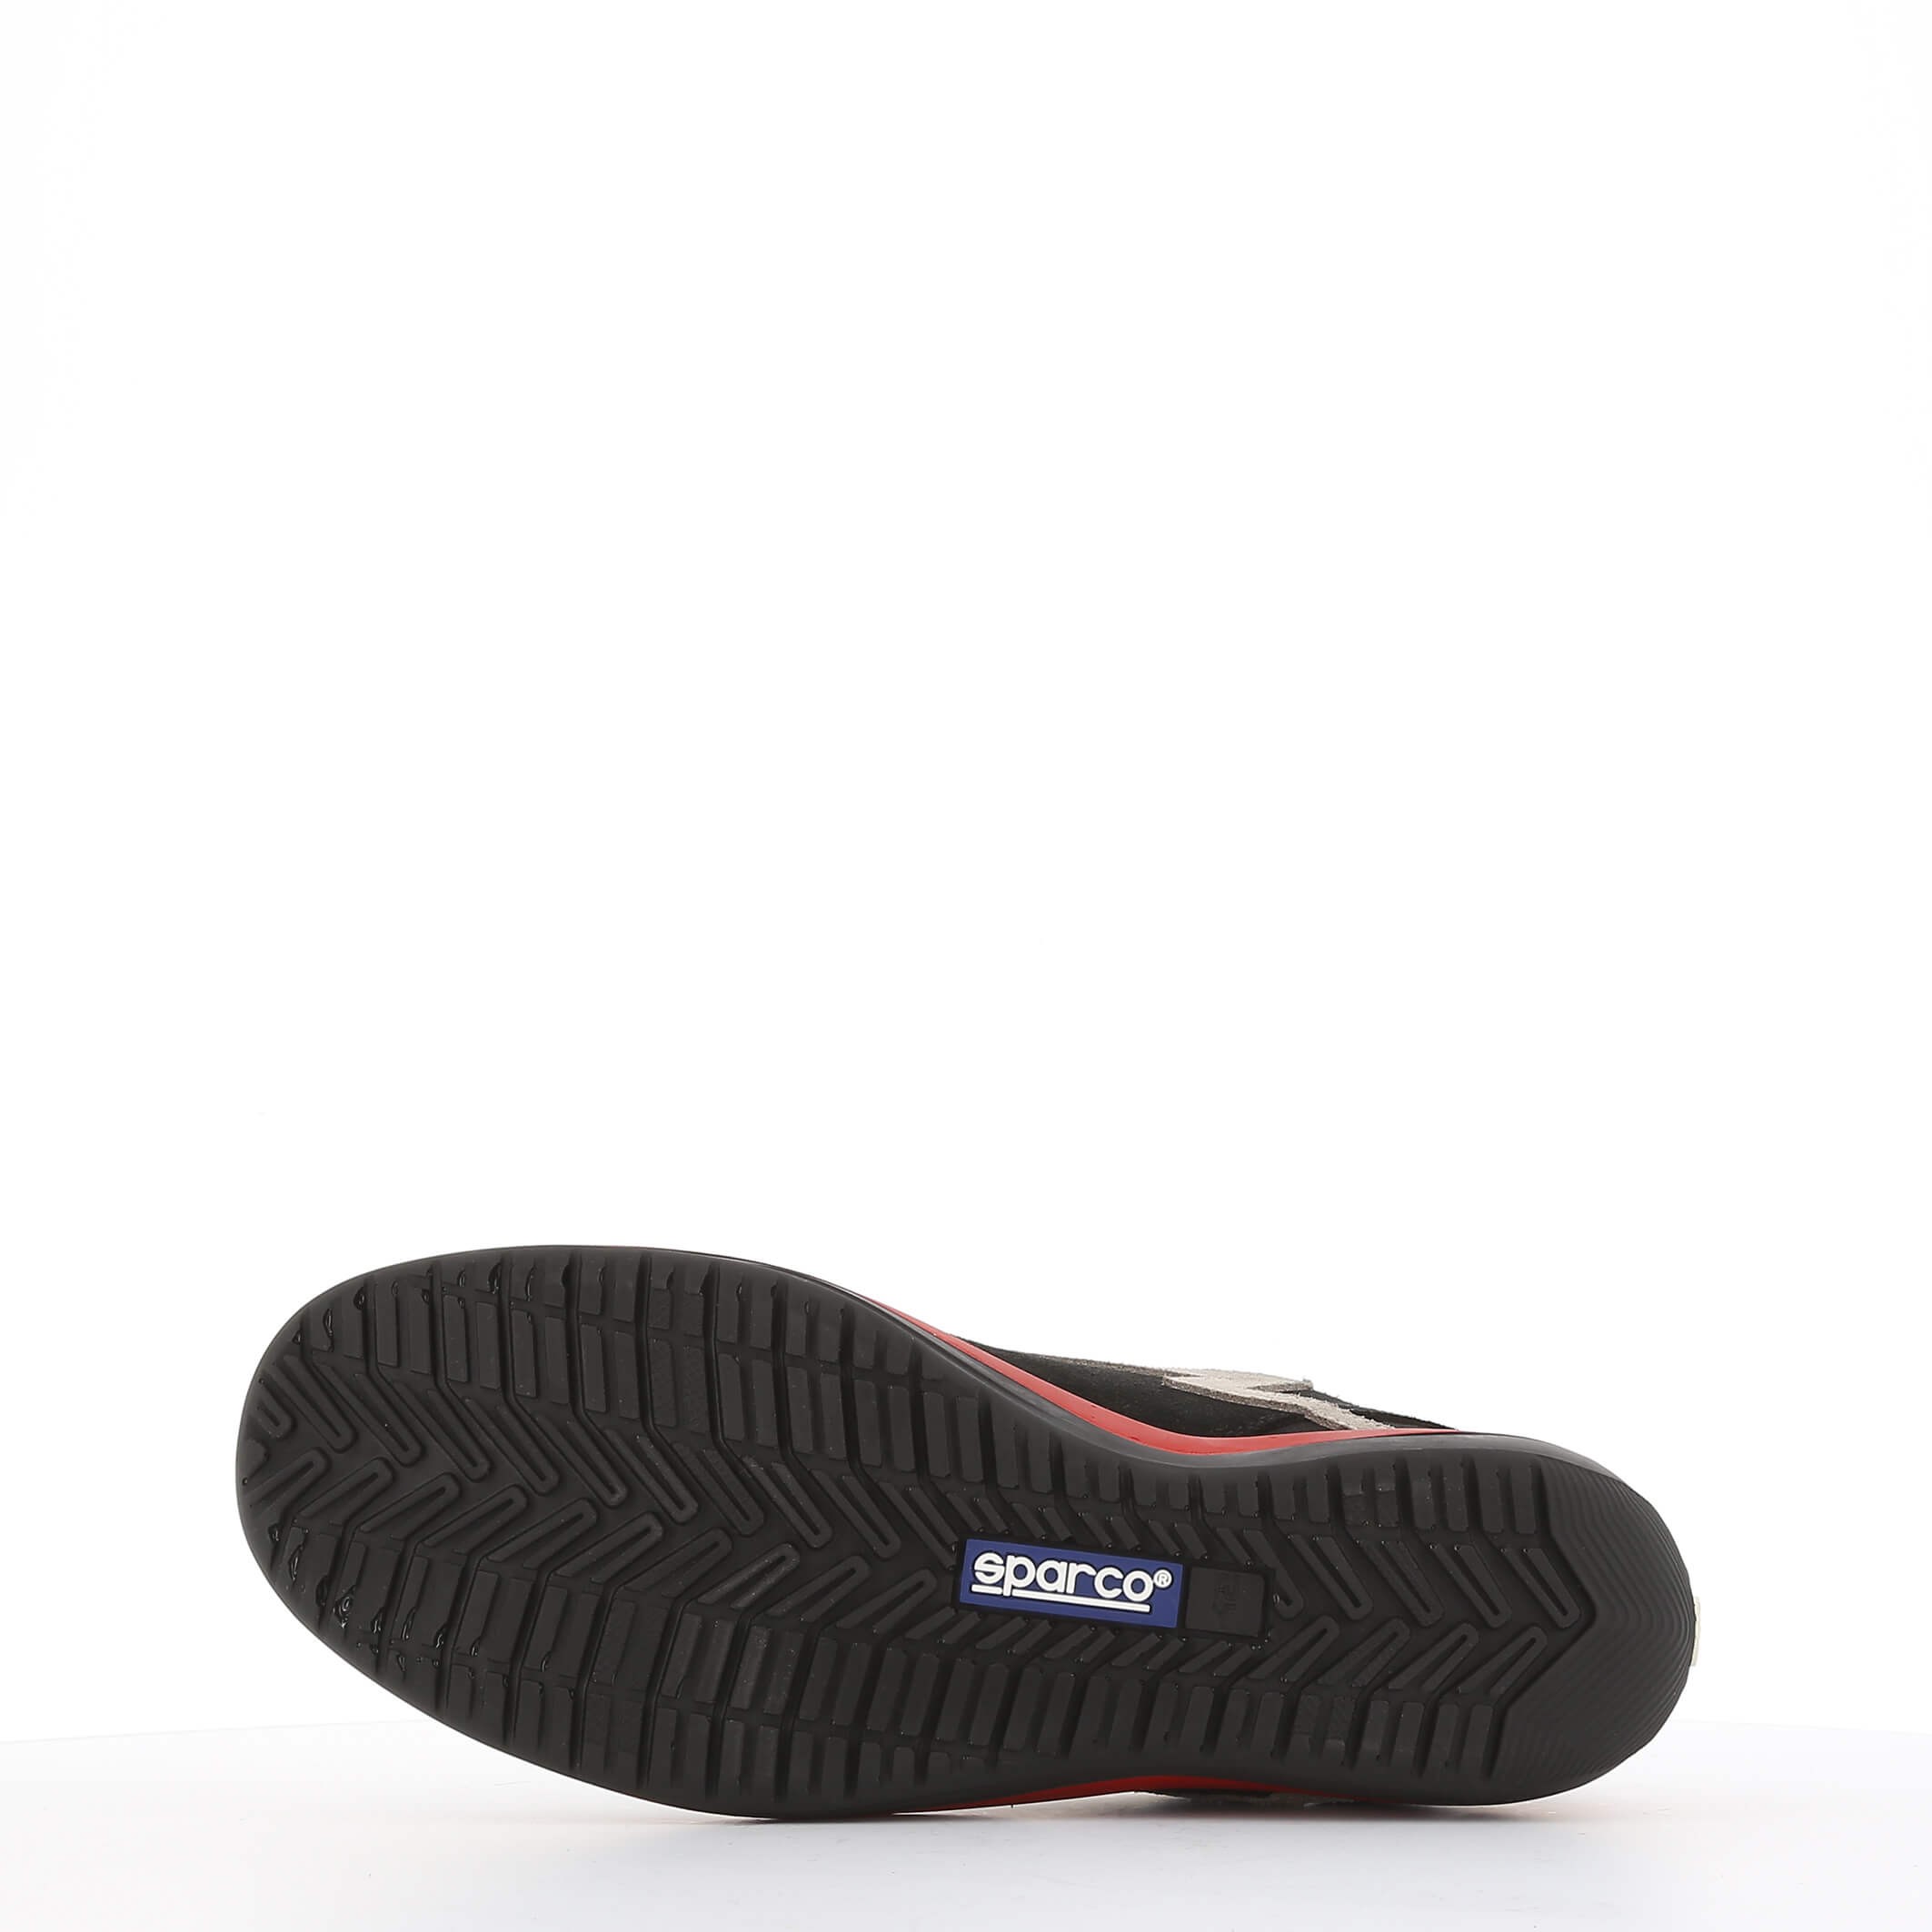 chaussure securite basse Sport evo noir rouge S3 Sparco cotepro vue 3